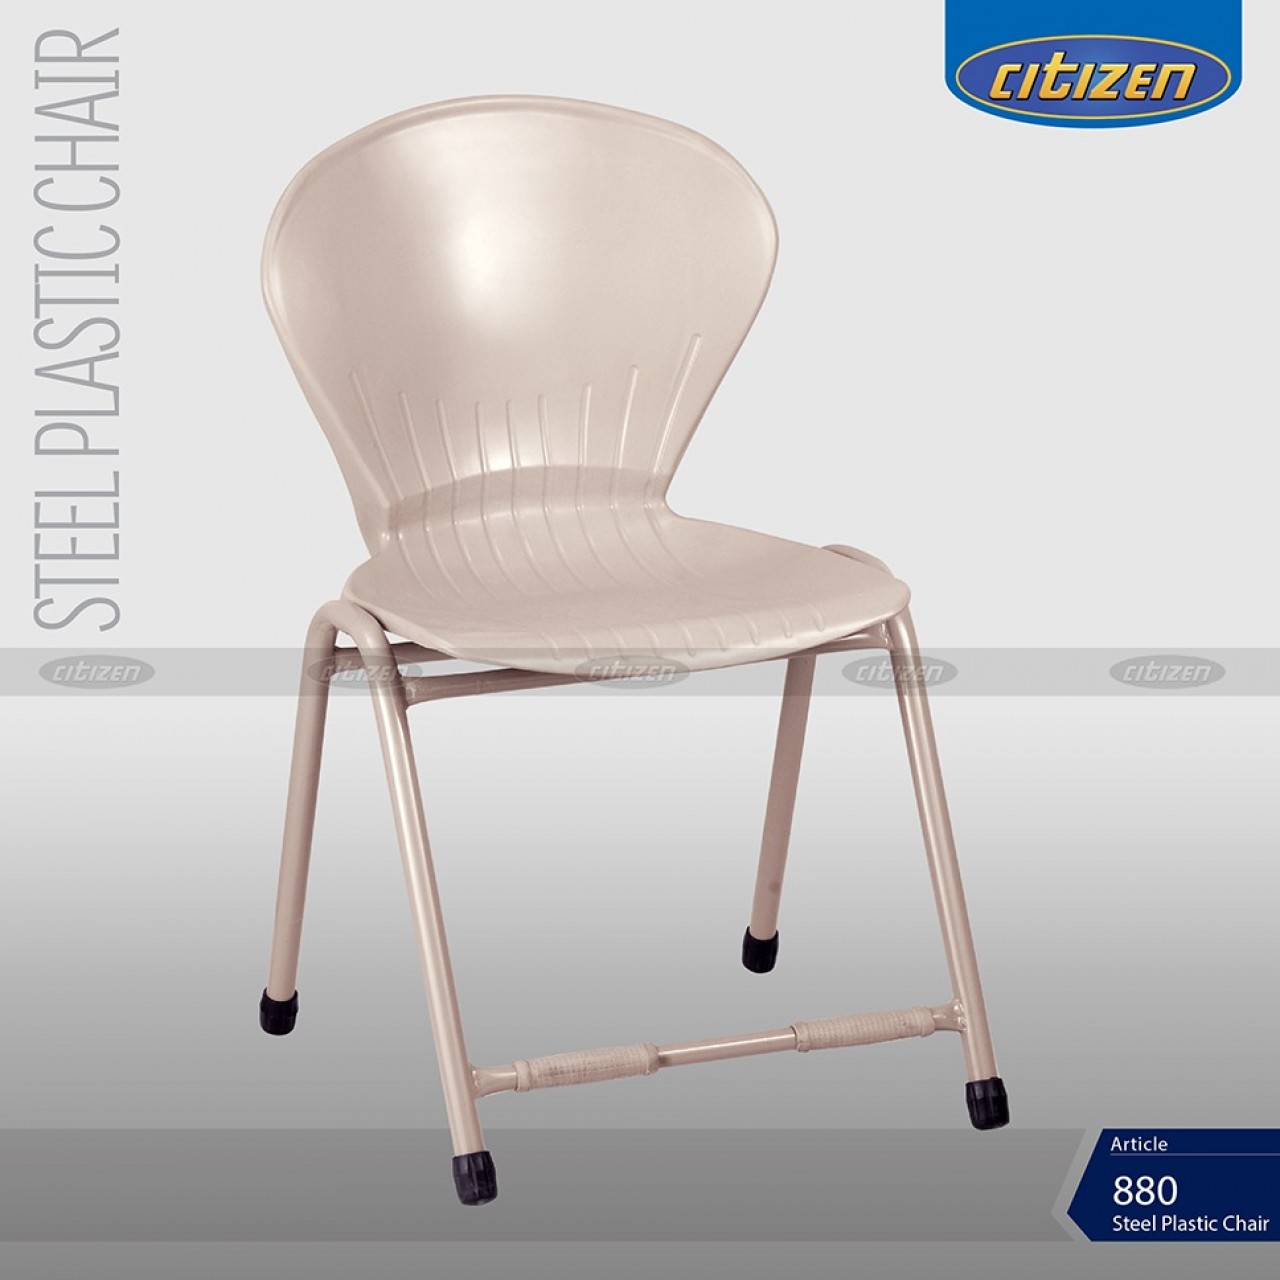 Citizen 880 Steel & Plastic Chair